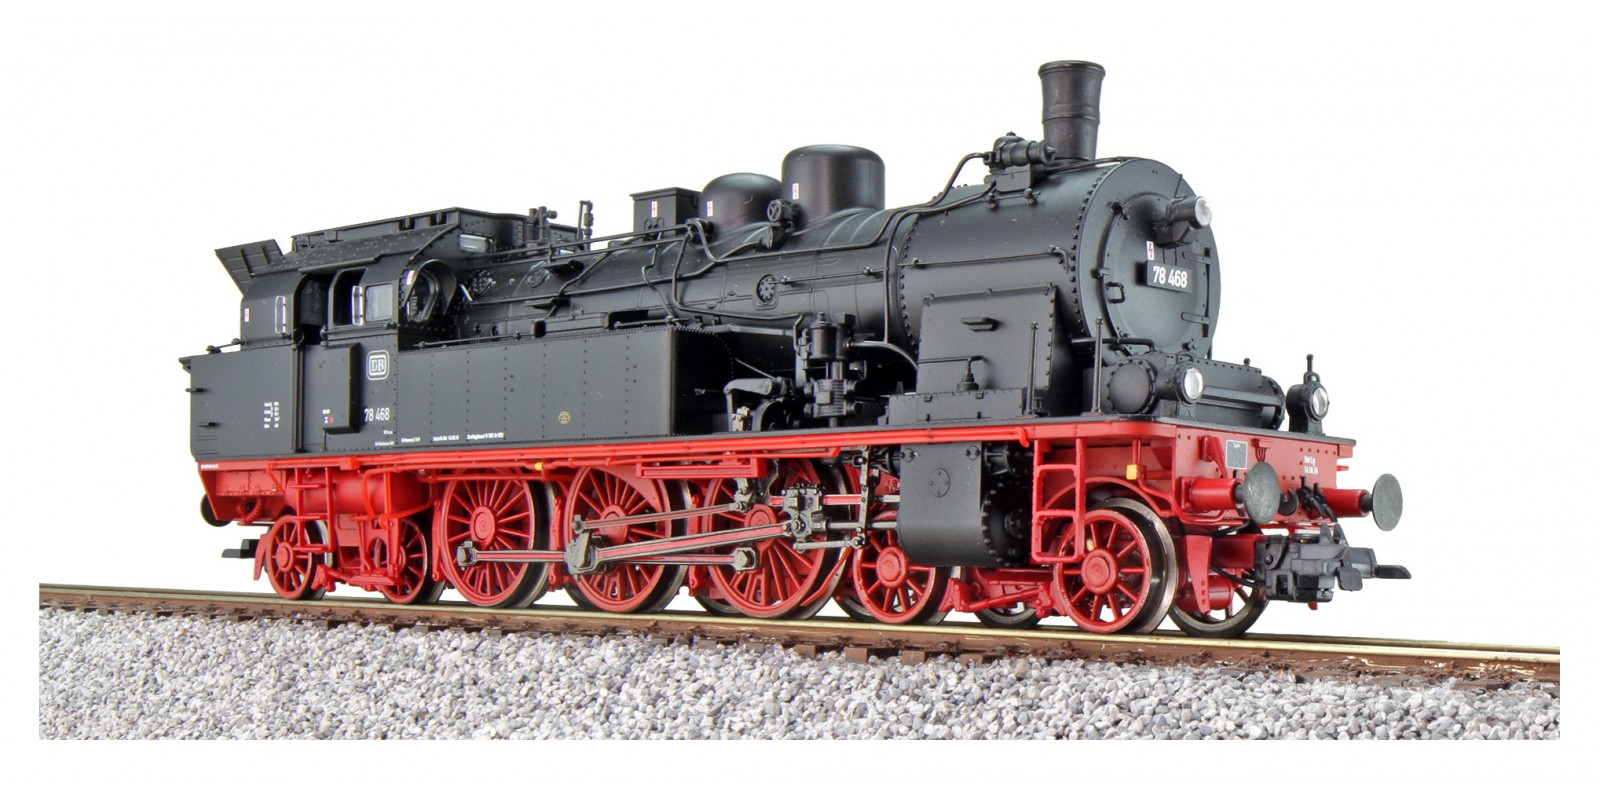 ES31187 Gauge H0 Steam locomotive T18, 78 468 Museum, era VI with sound and smoke ESU / H0 / Steam Locomotive / Tank Locomotive